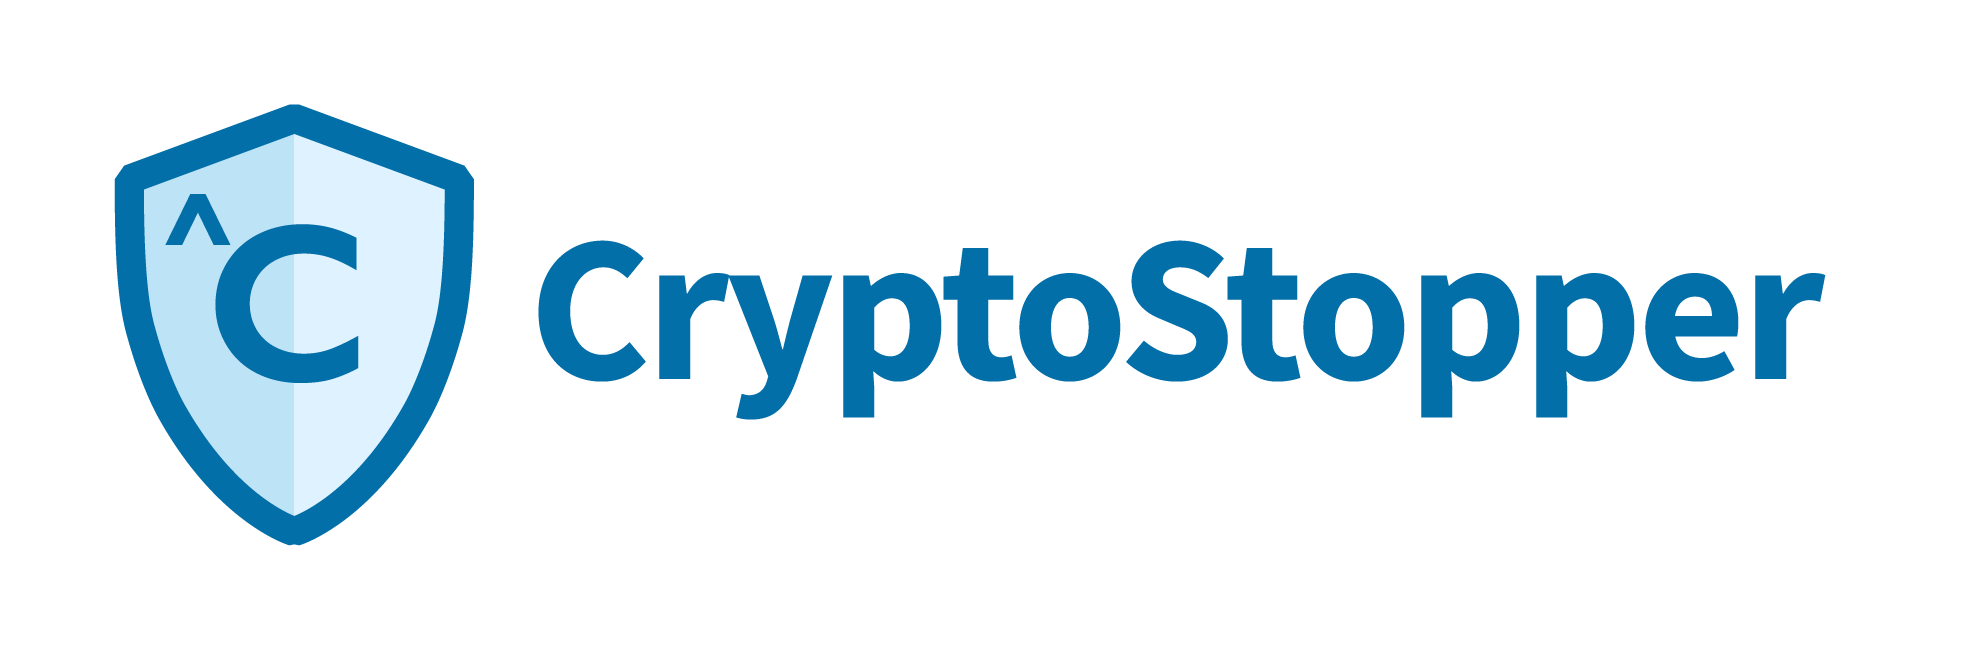 CryptoStopper™